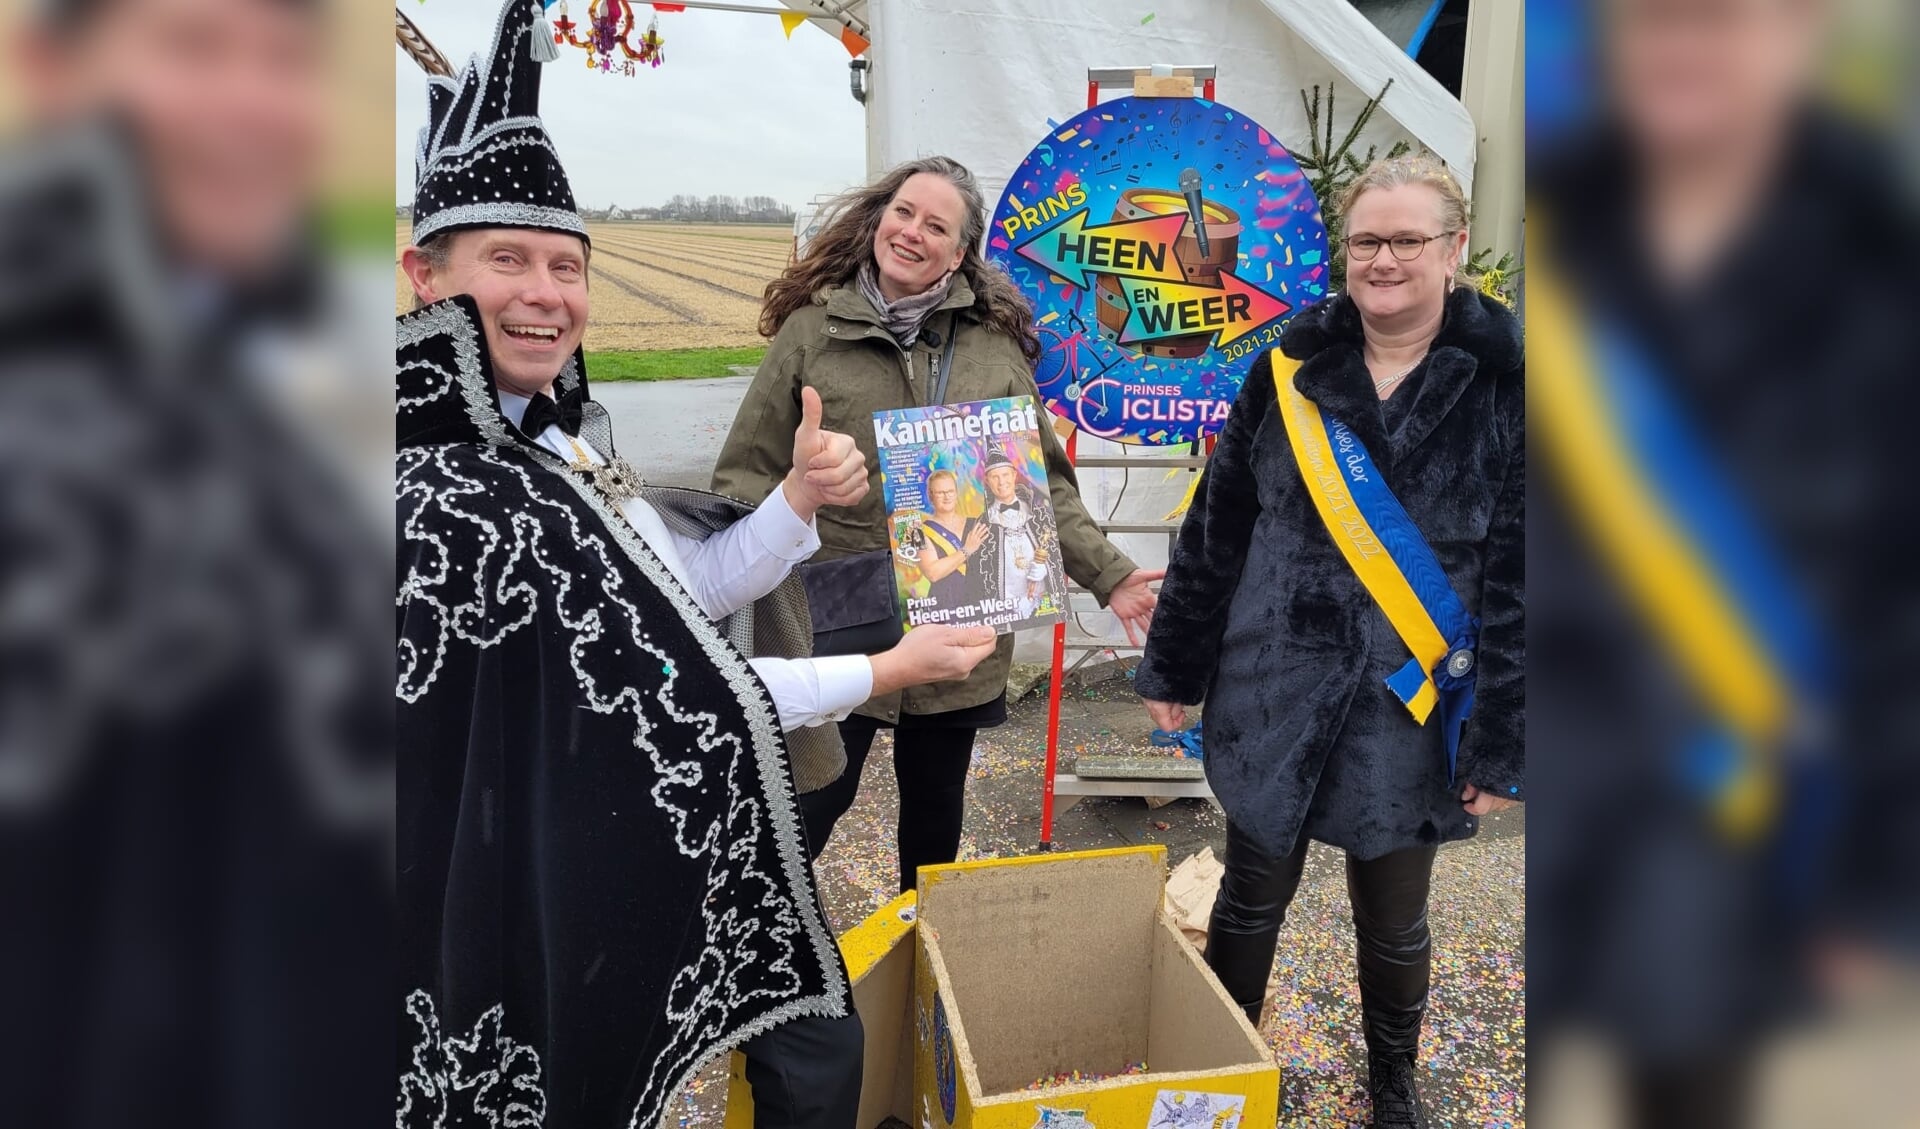 Vlnr: Prins Heen-en-Weer, bladmanager Conny vd Burg en Prinses Ciclysta. | Foto's: met dank aan Paul Jansen.